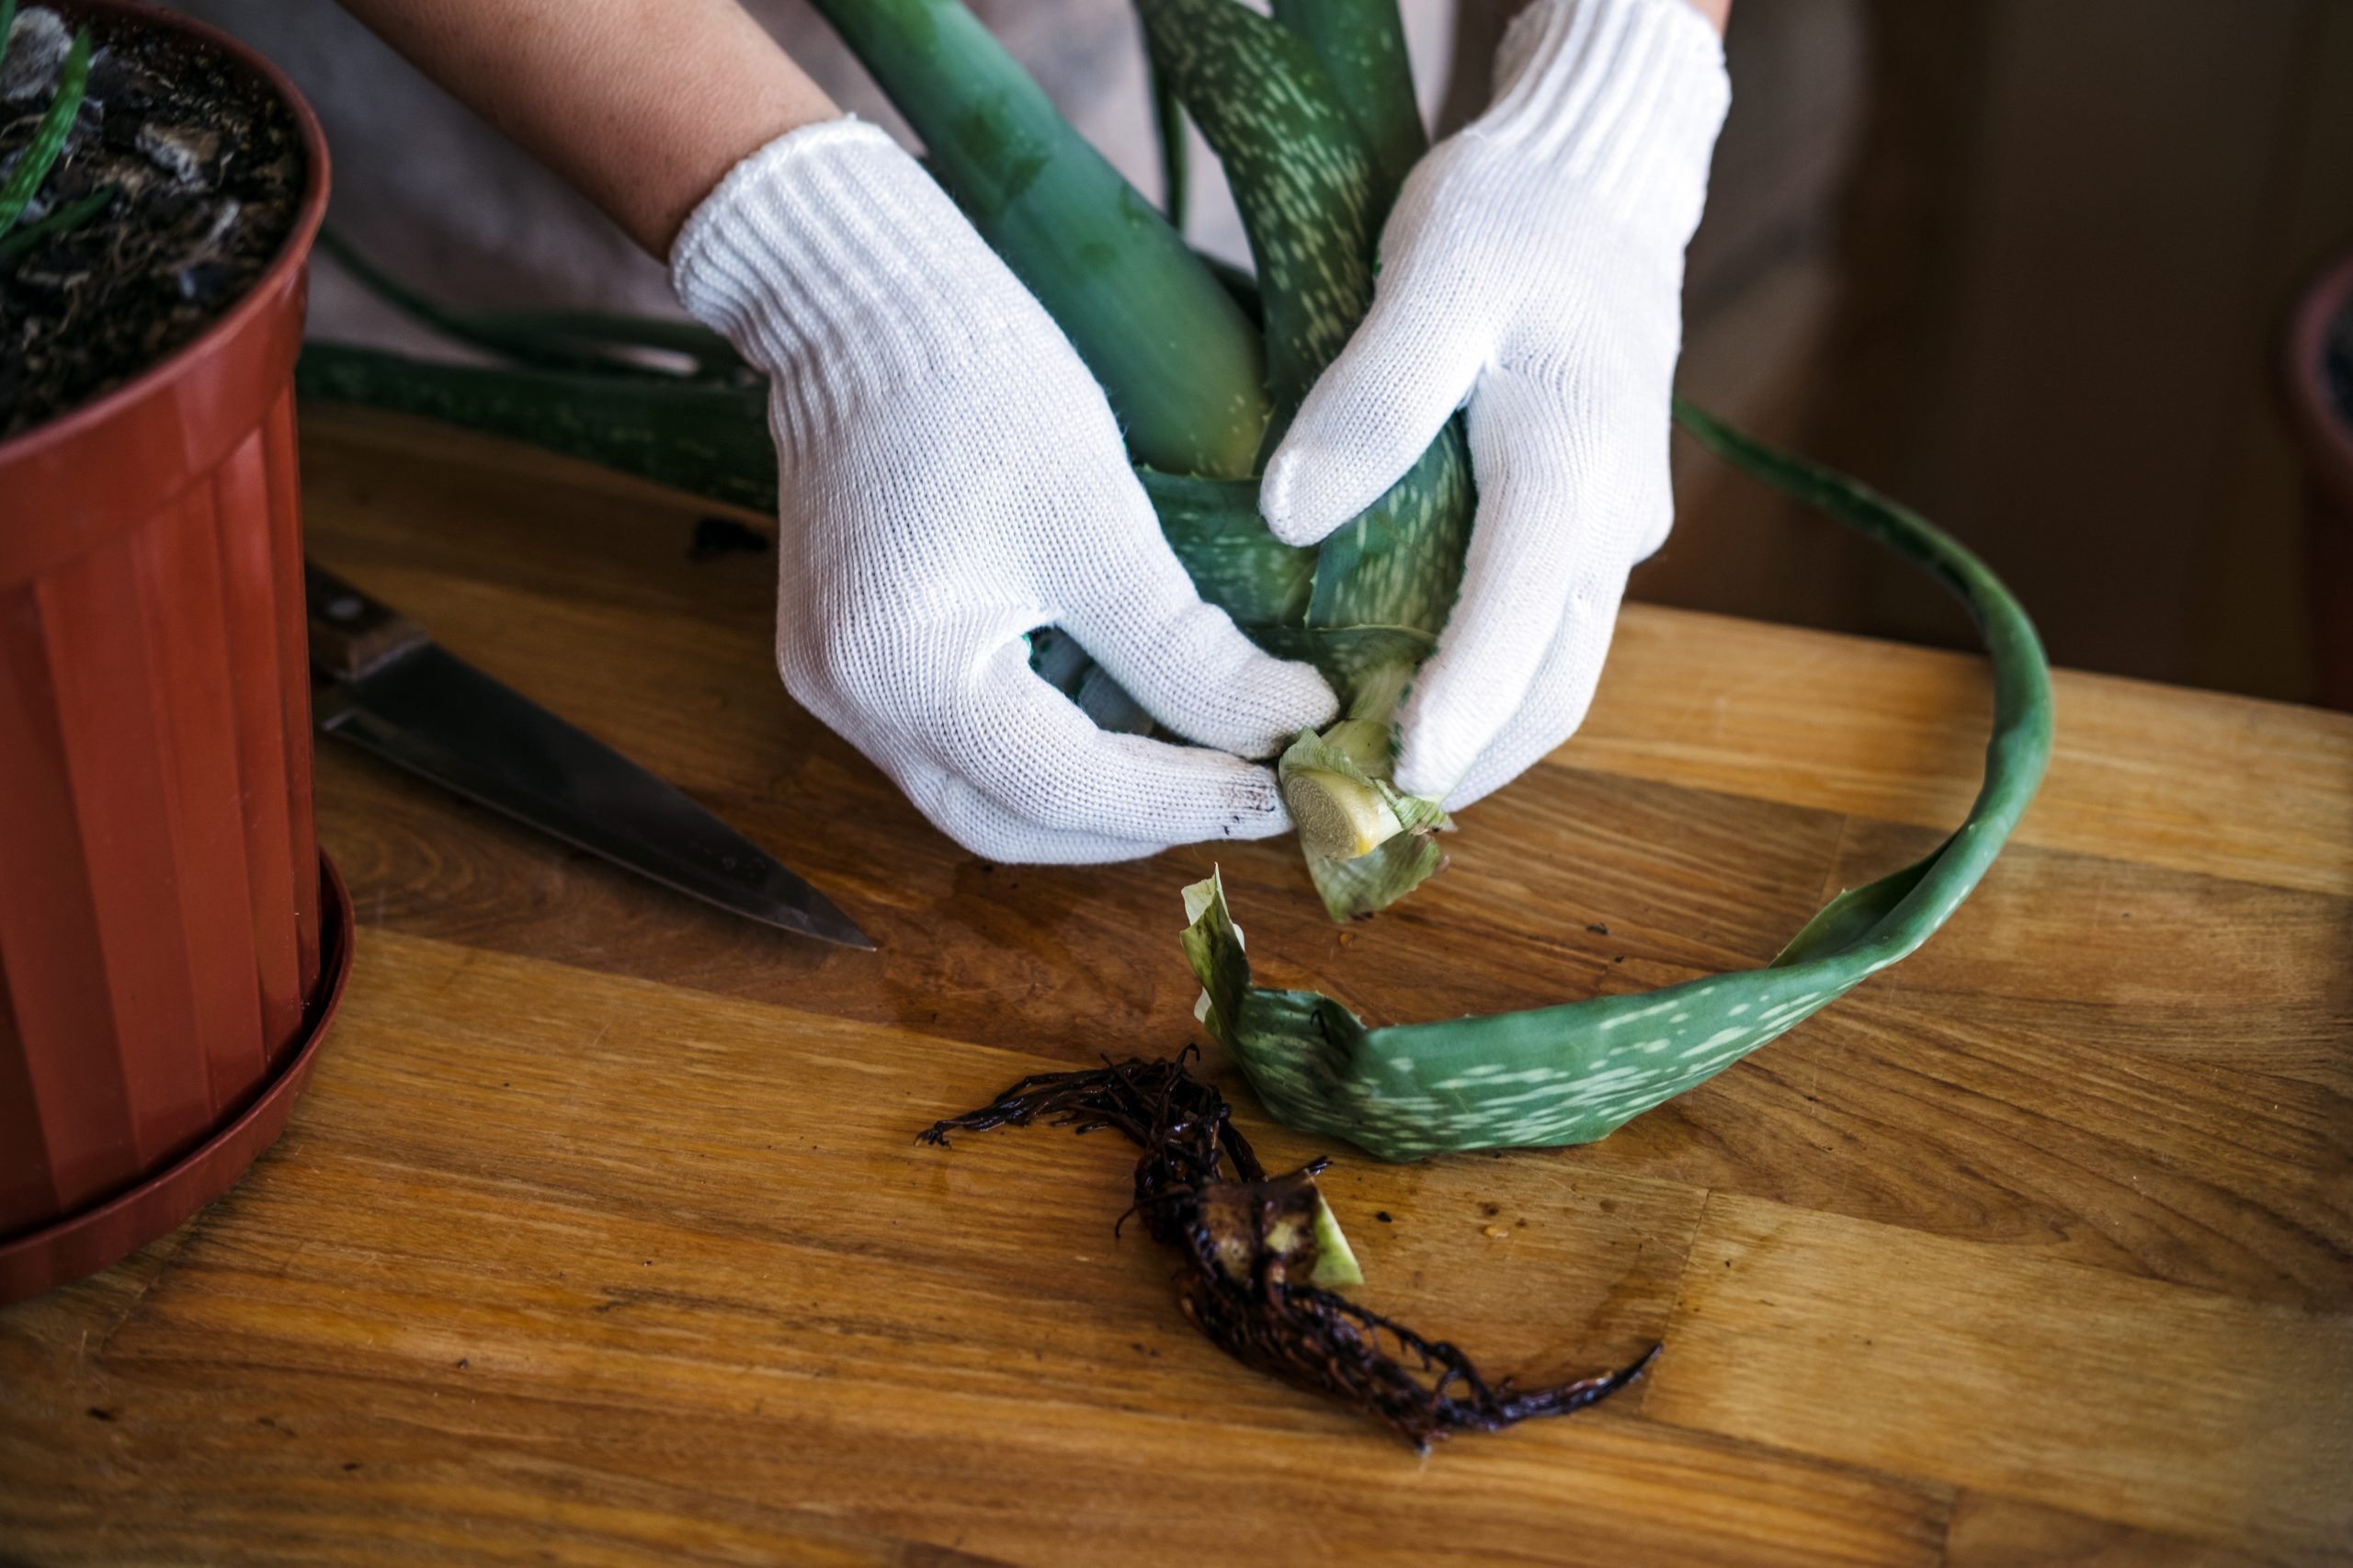 How to Propagate Aloe Vera in 4 Easy Methods